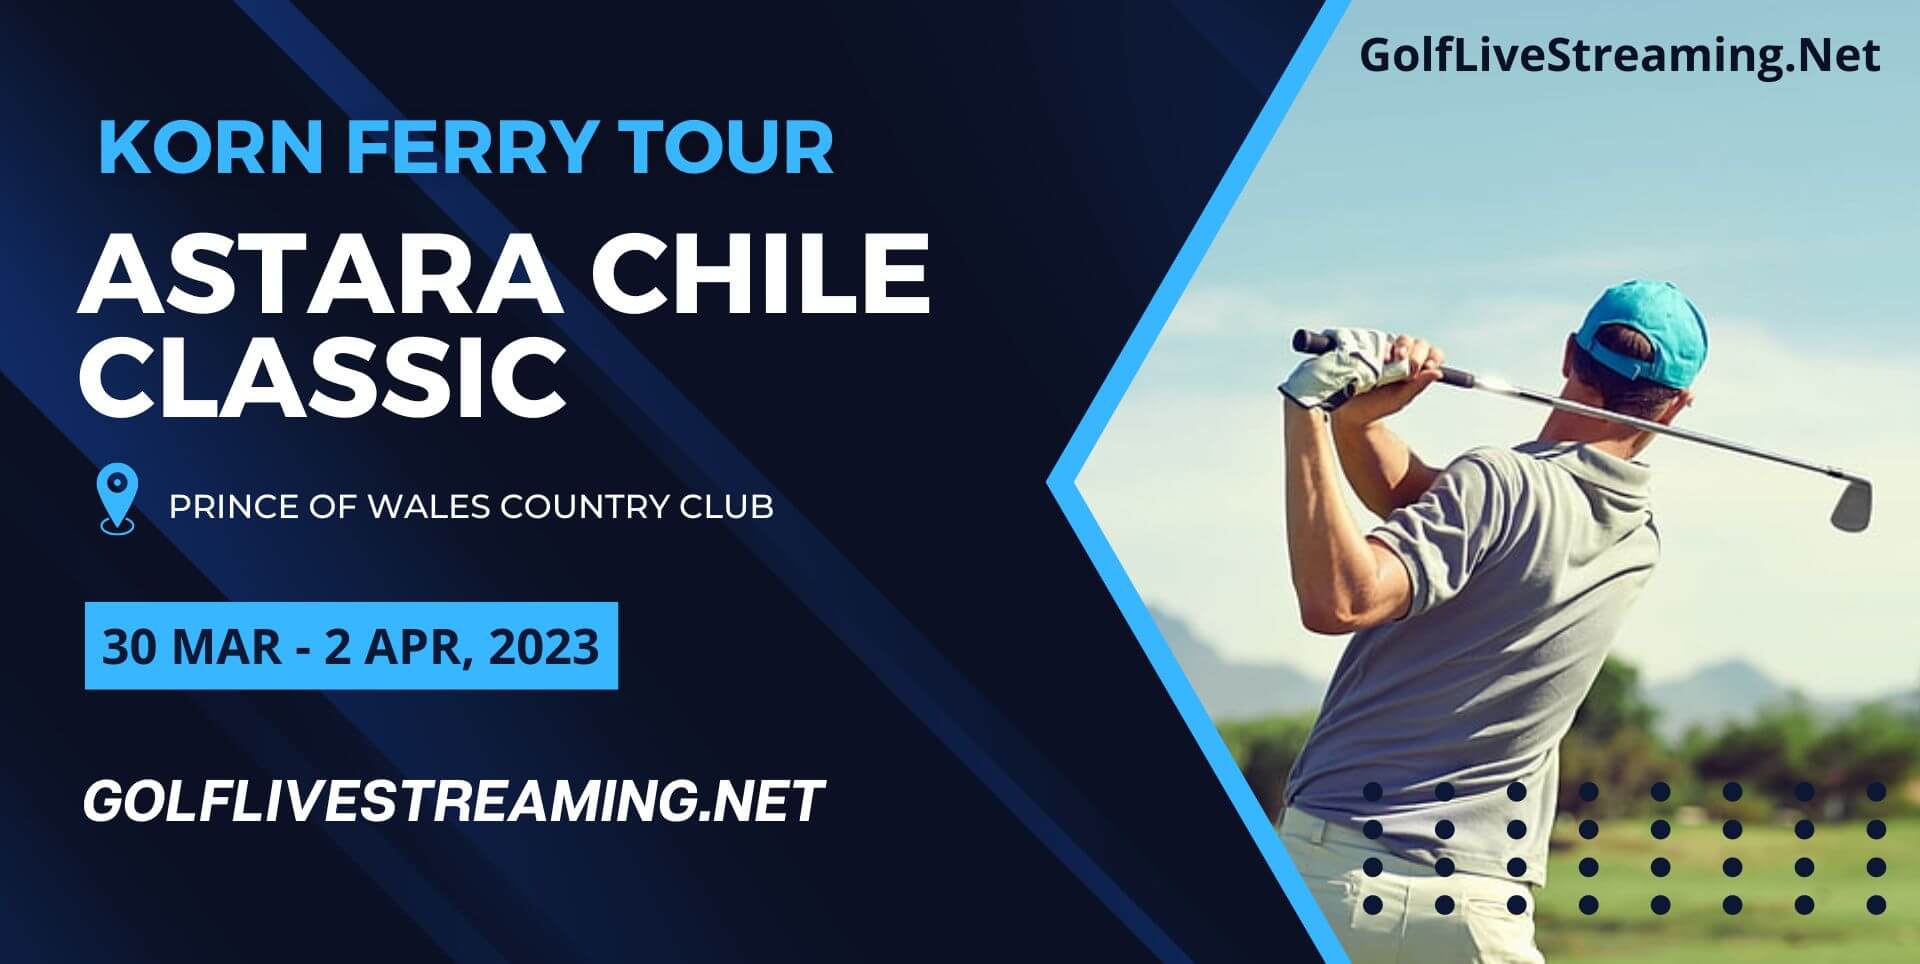 Astara Chile Classic Round 4 Live Stream 2023 | Korn Ferry Tour